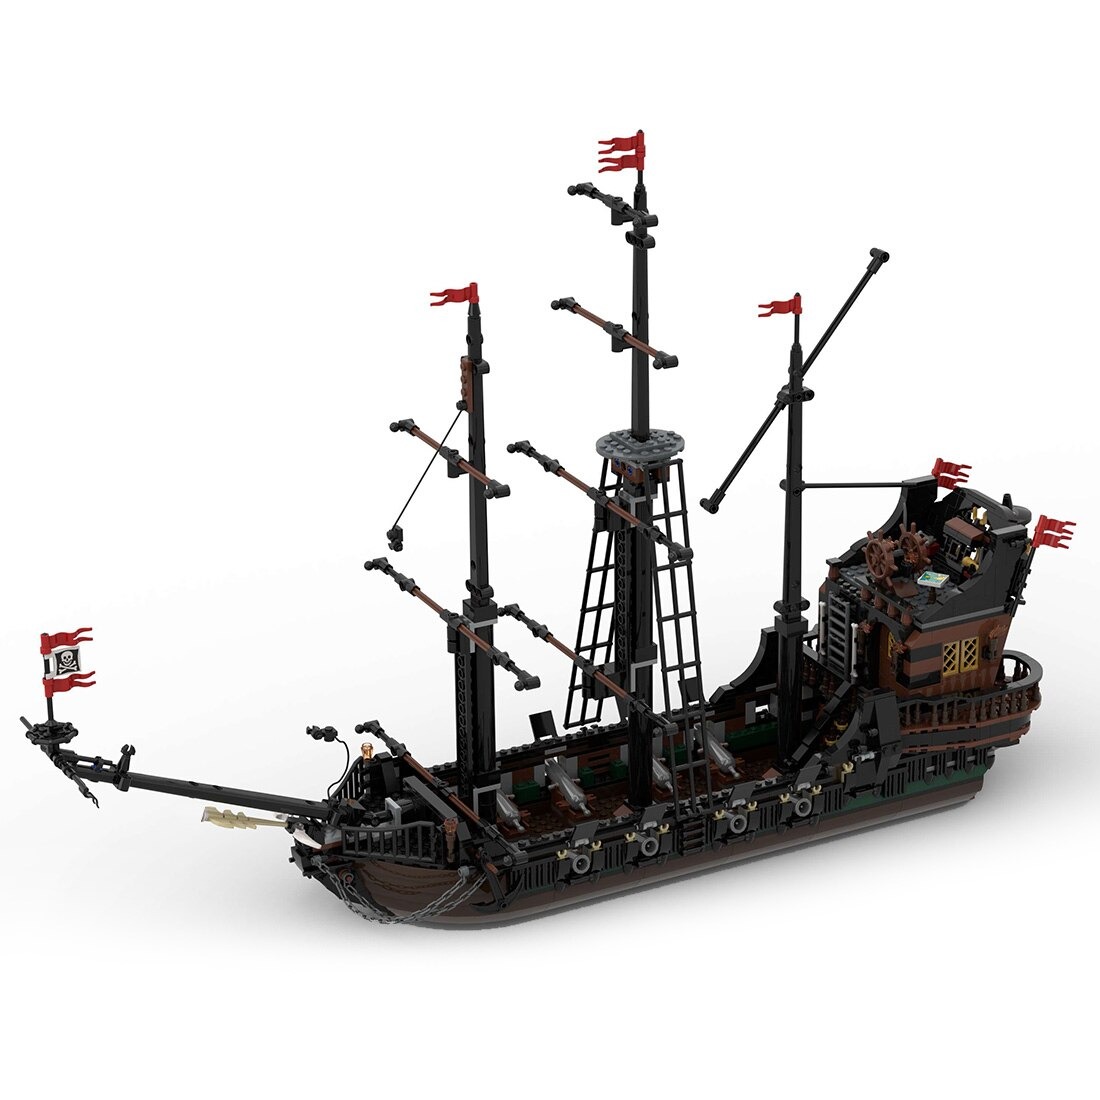 Authorized Moc 36789 Pirate Ship Medieva Main 0.jpg